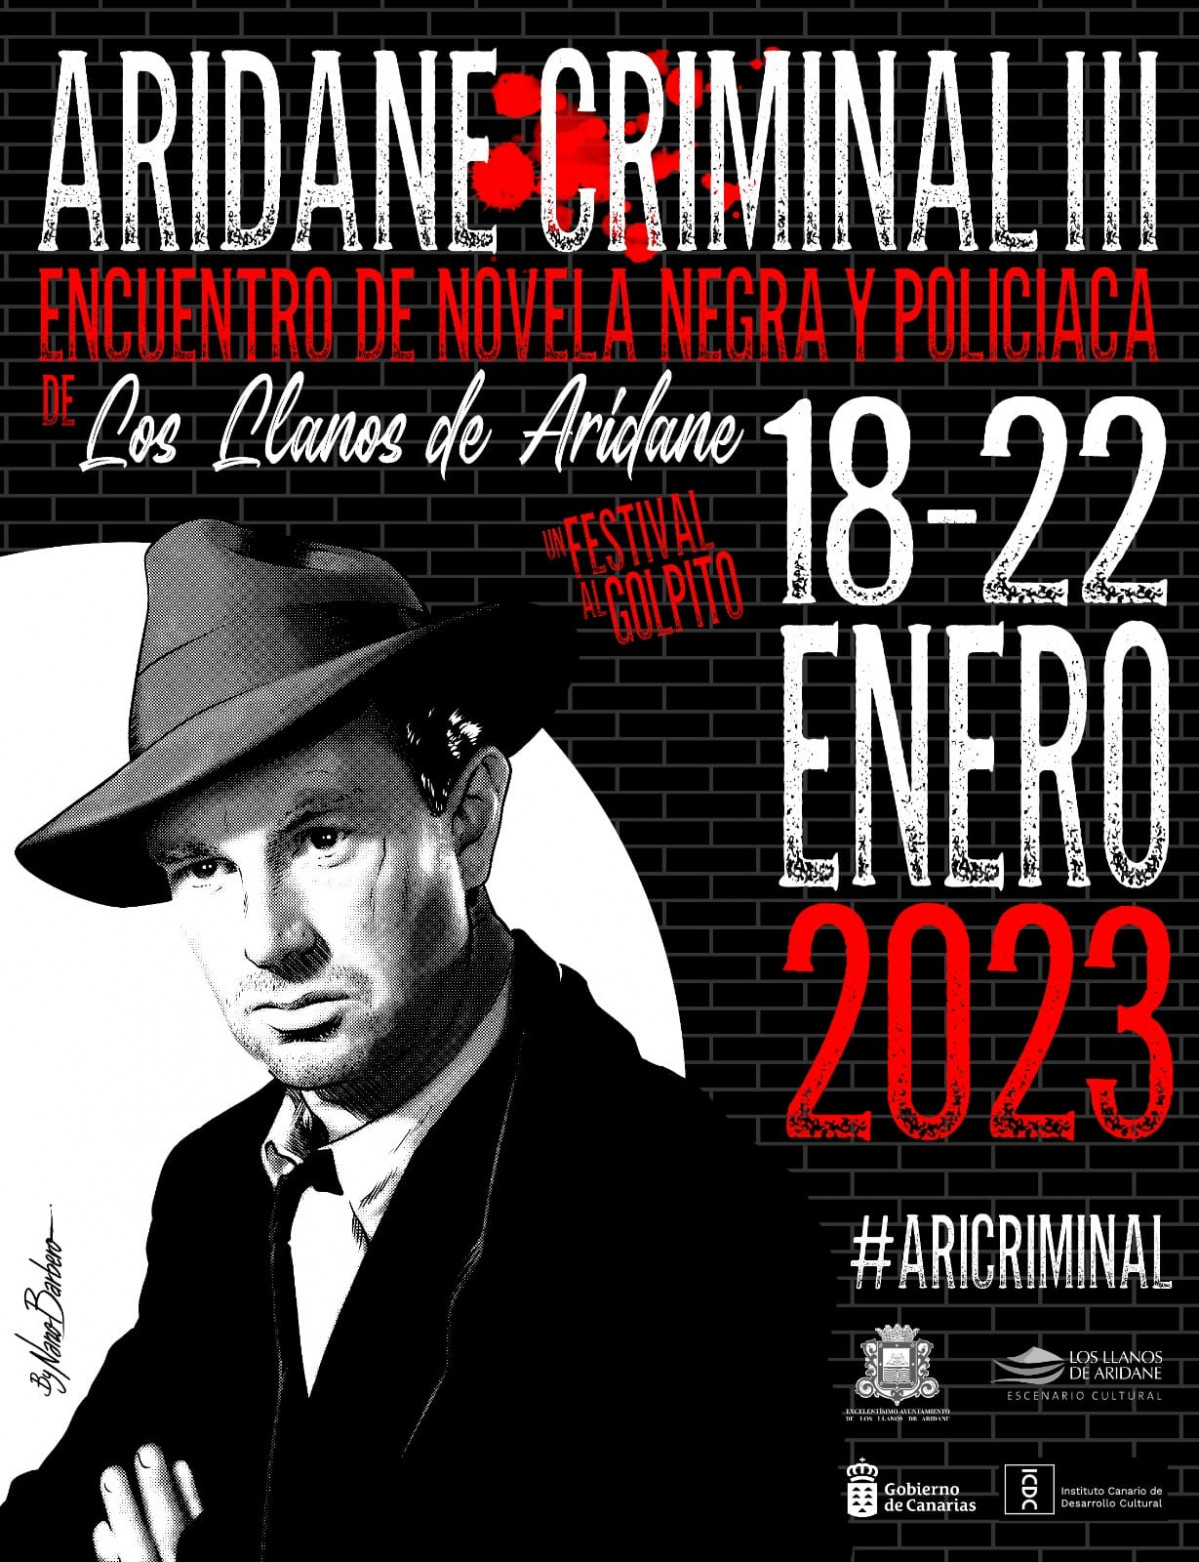 Aridane criminal